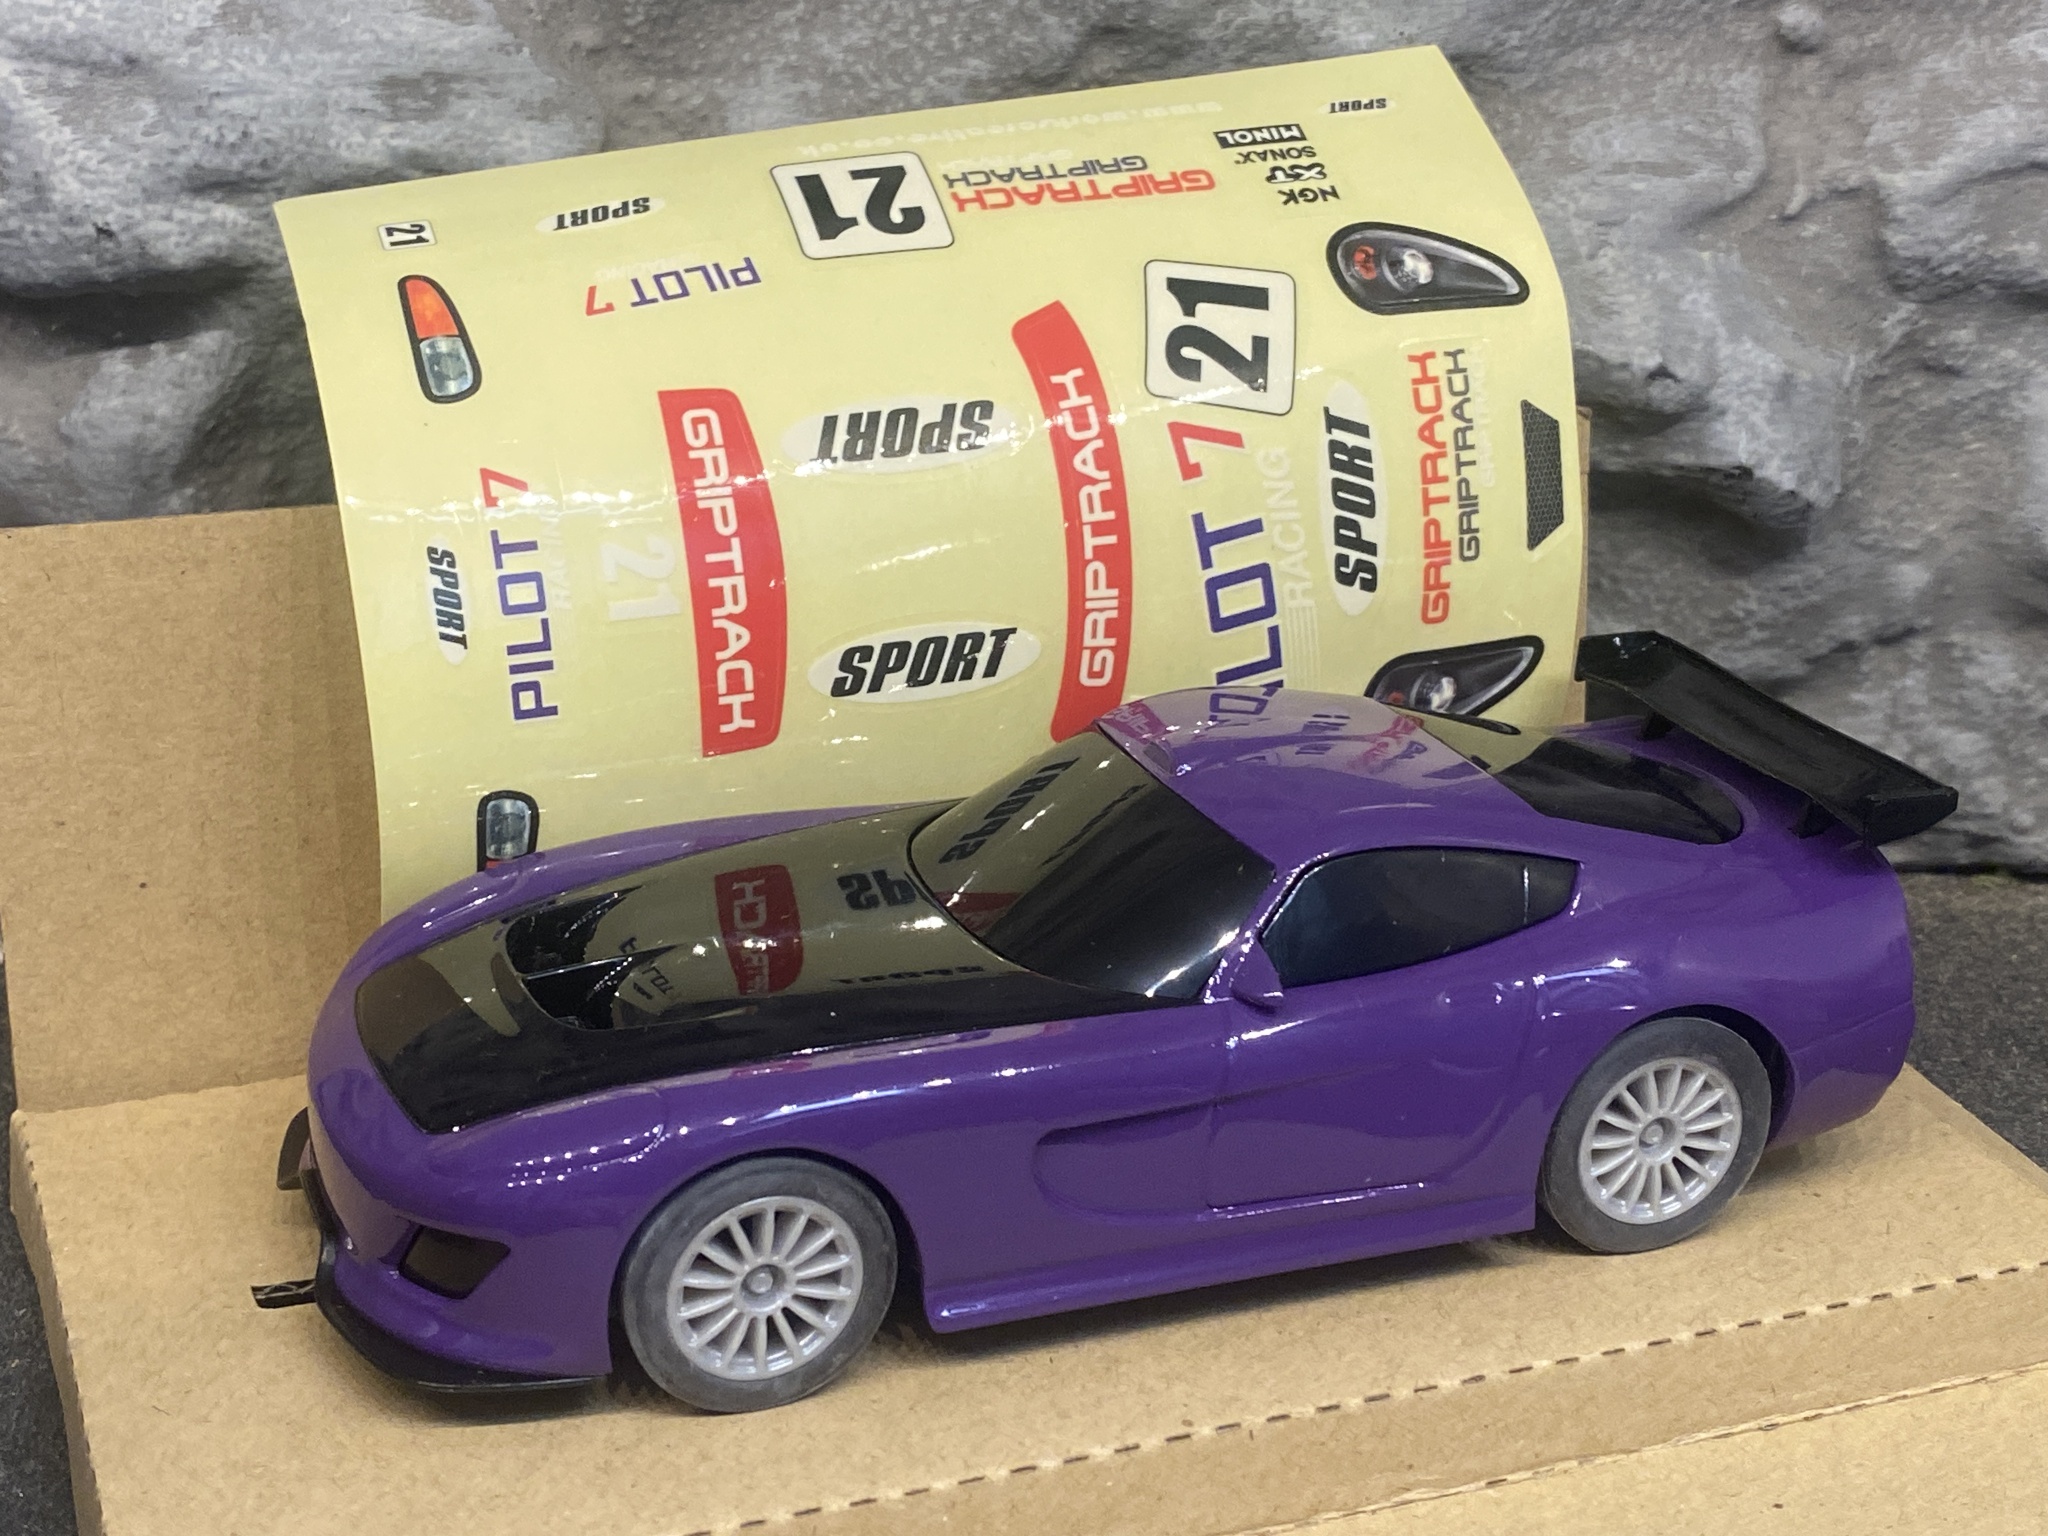 Skala 1/32 Analog Slotcar - GT Lightning, Purple w stickers